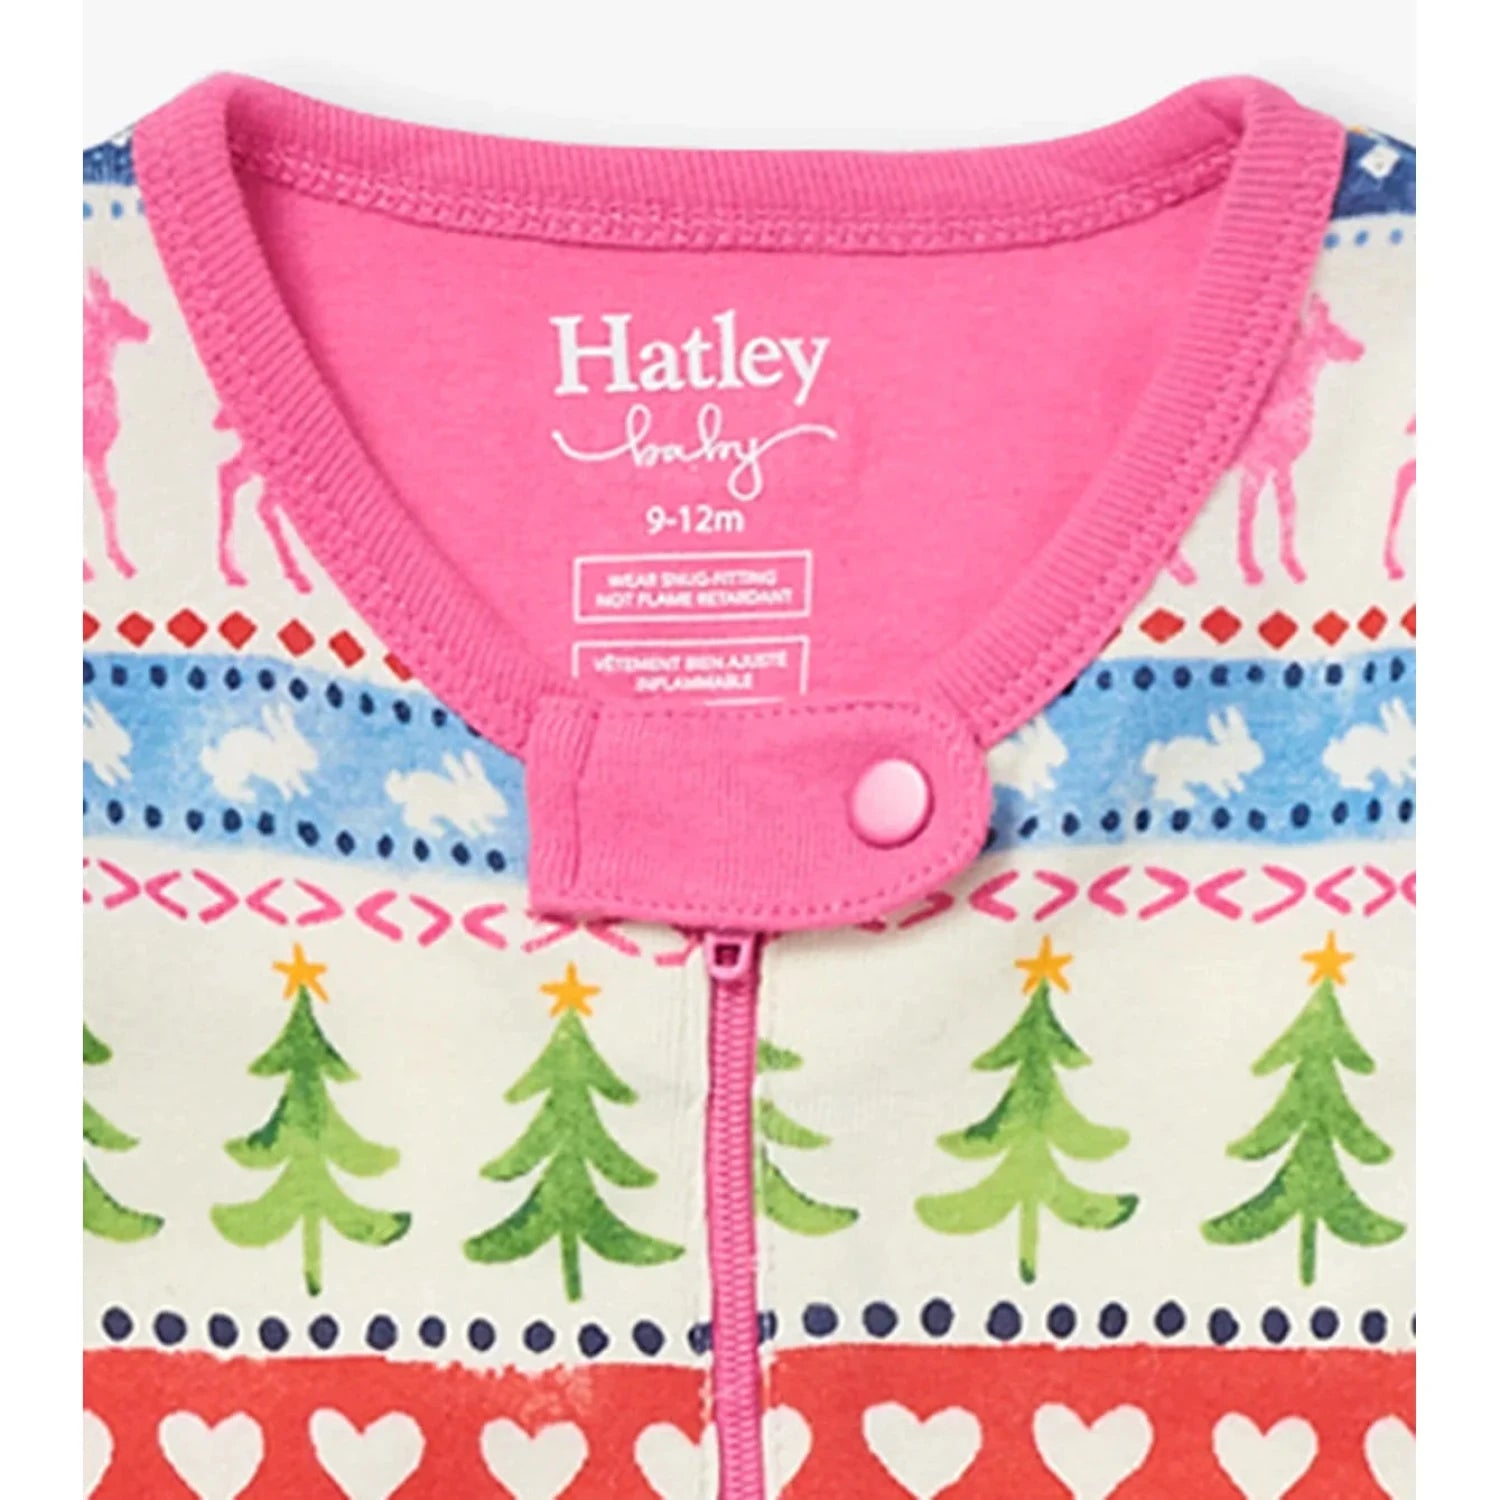 Hatley Cream Painted Fairisle Baby Footed Sleeper collar detail.